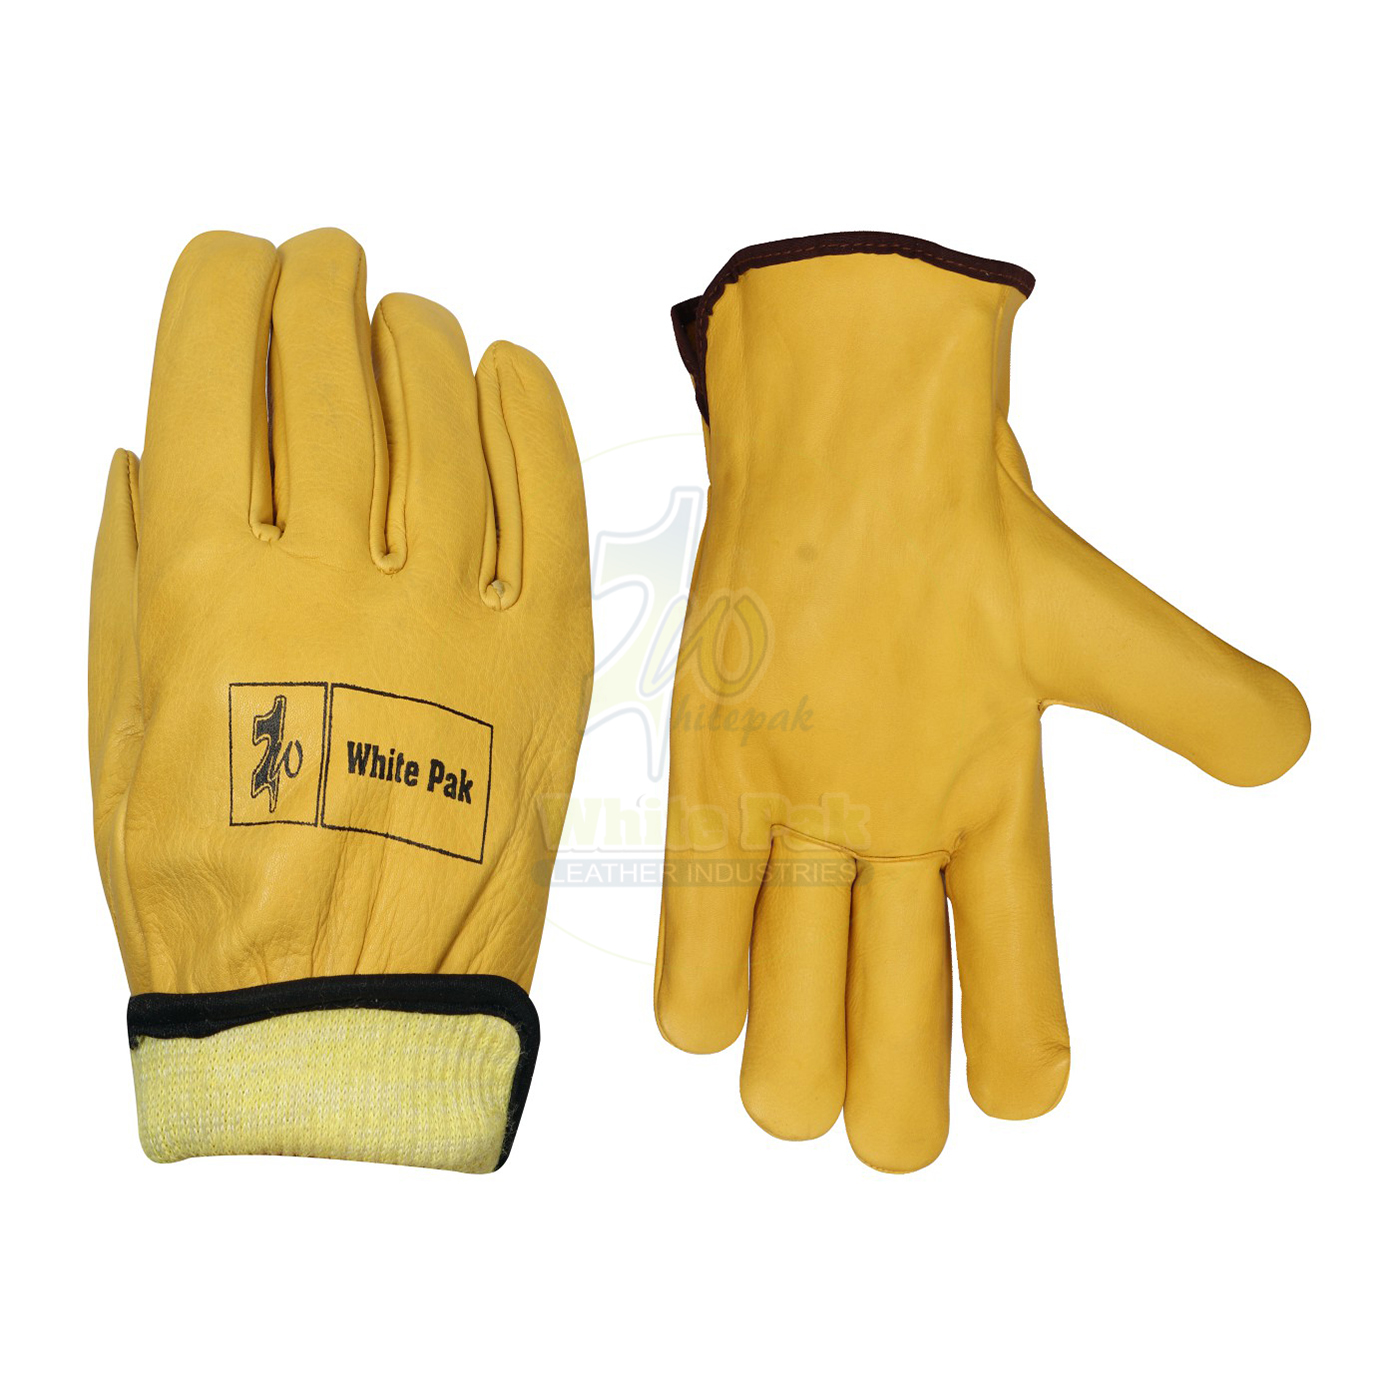 Cut Resistance Driver Gloves